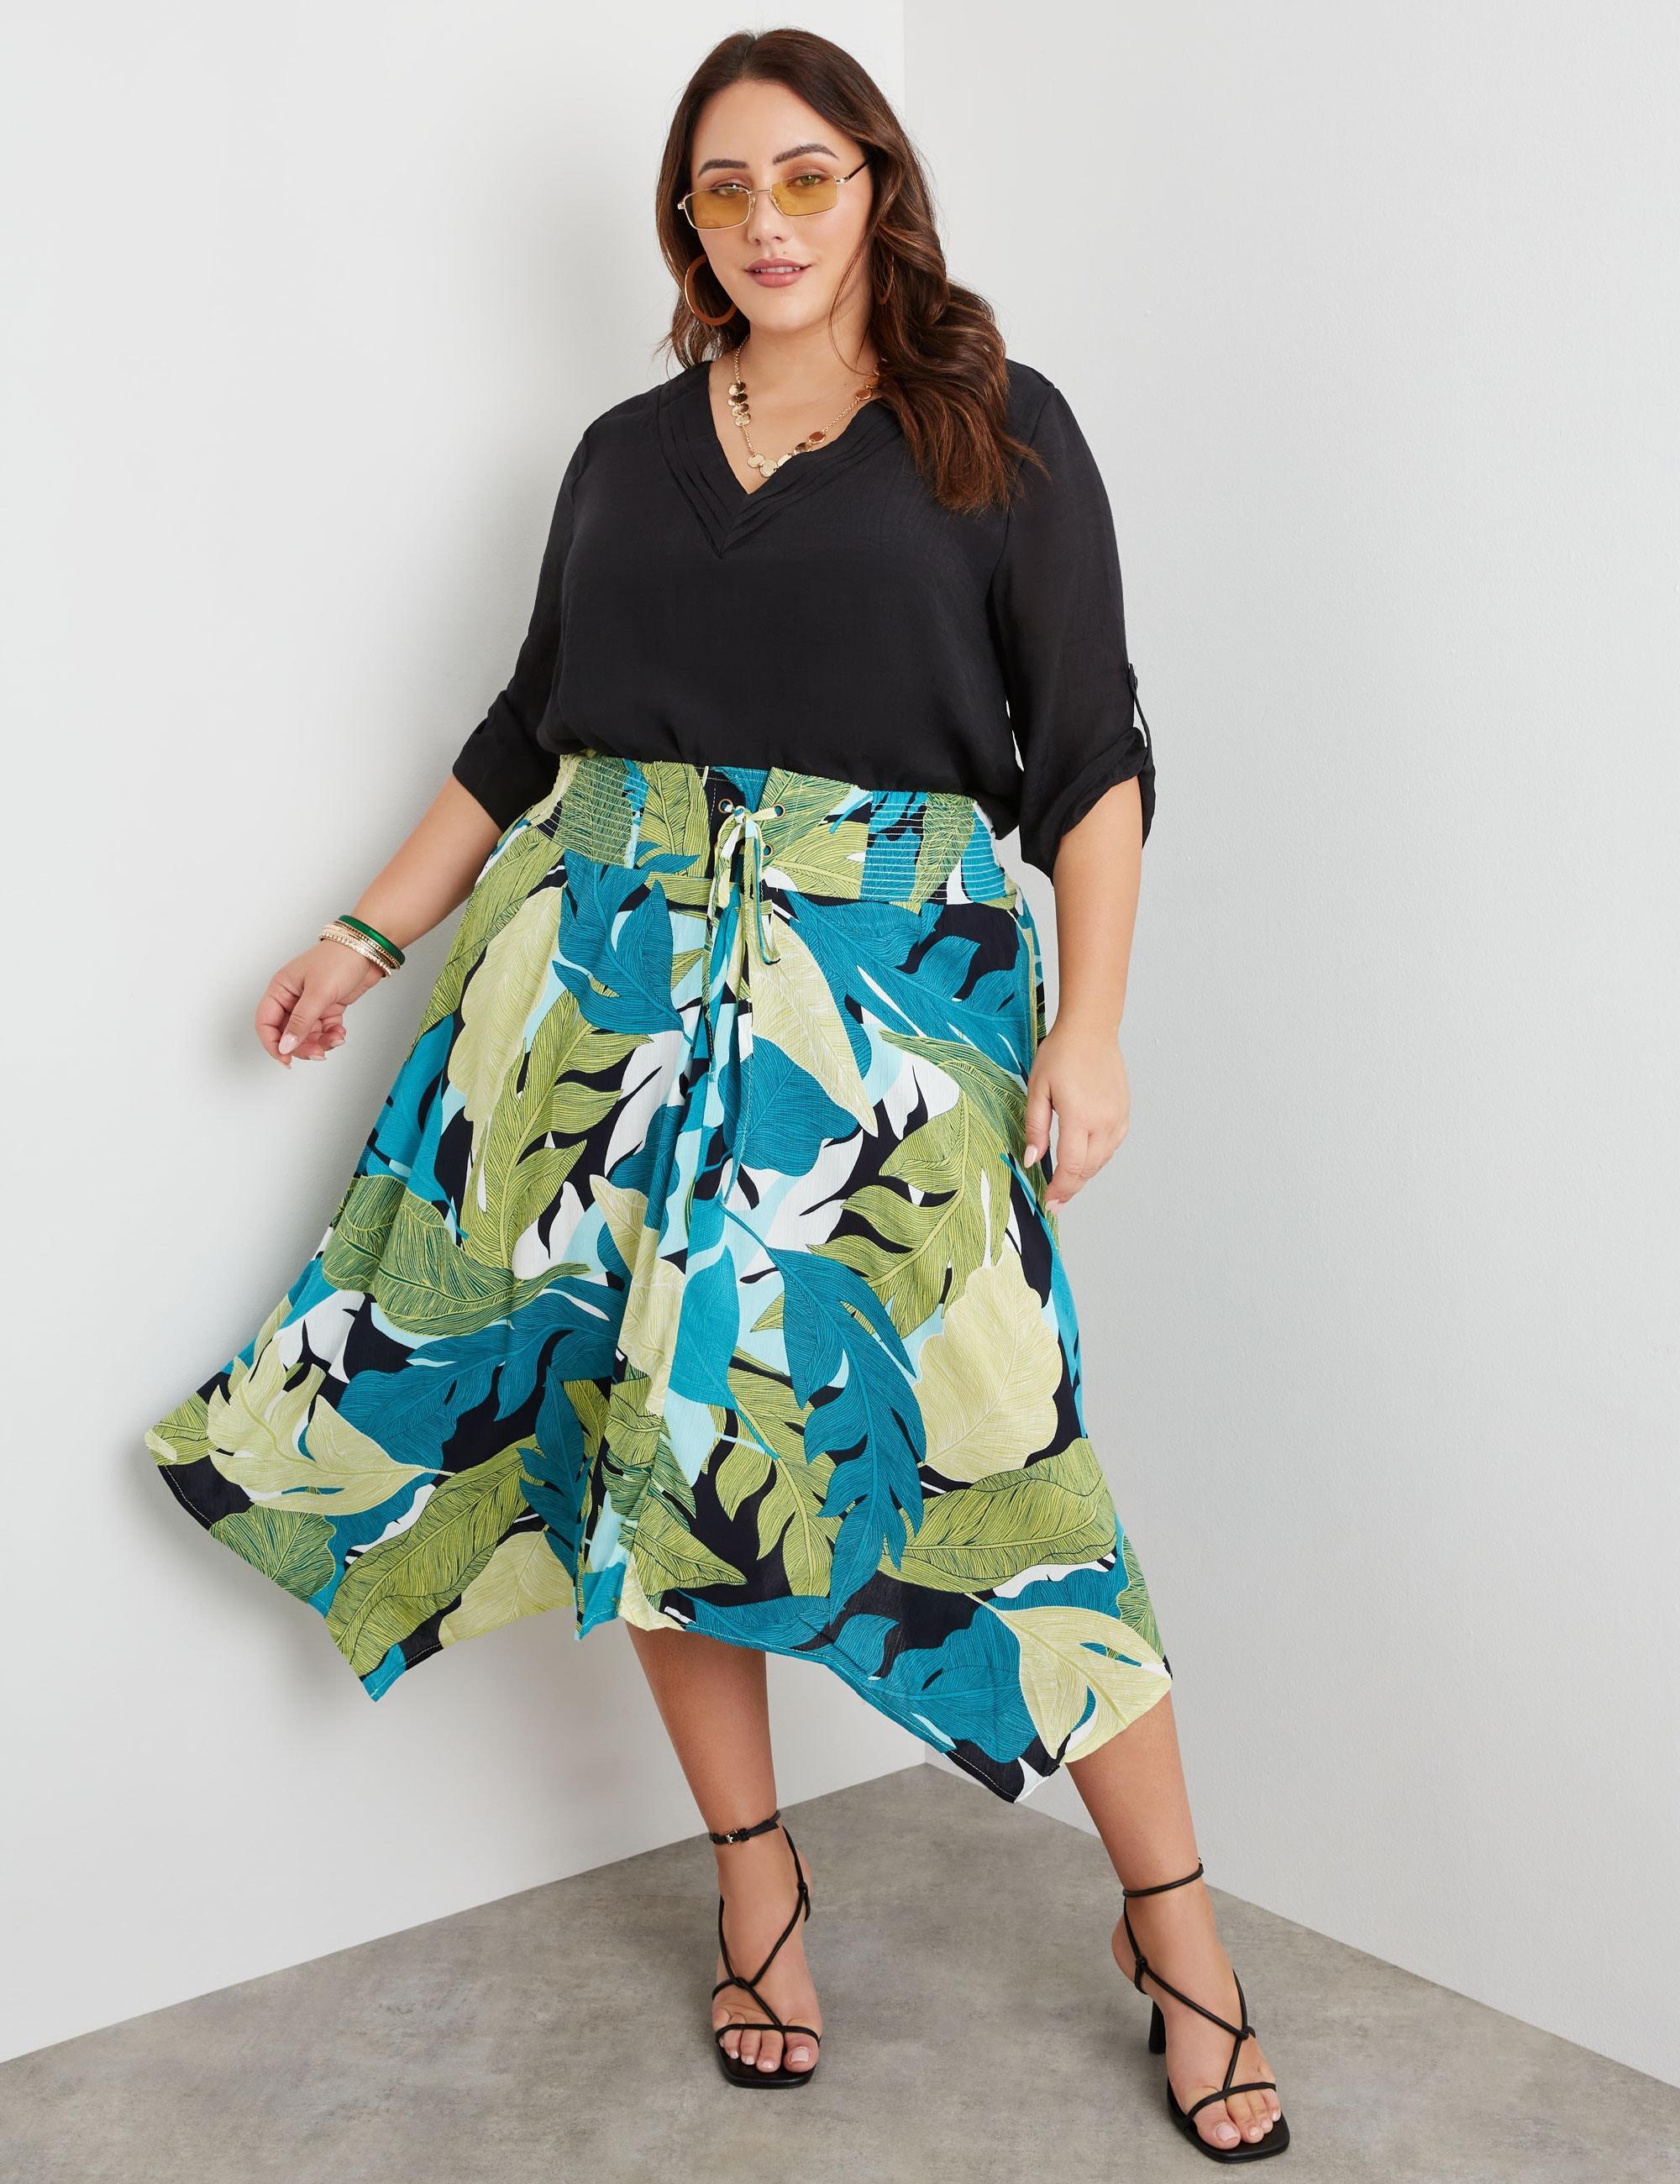 BeMe - Plus Size - Womens Skirts - Midi - Winter - Green - A Line - Work Clothes - Tropical Leaf - Oversized - Hanky Hem - Knee Length - Casual Fahion